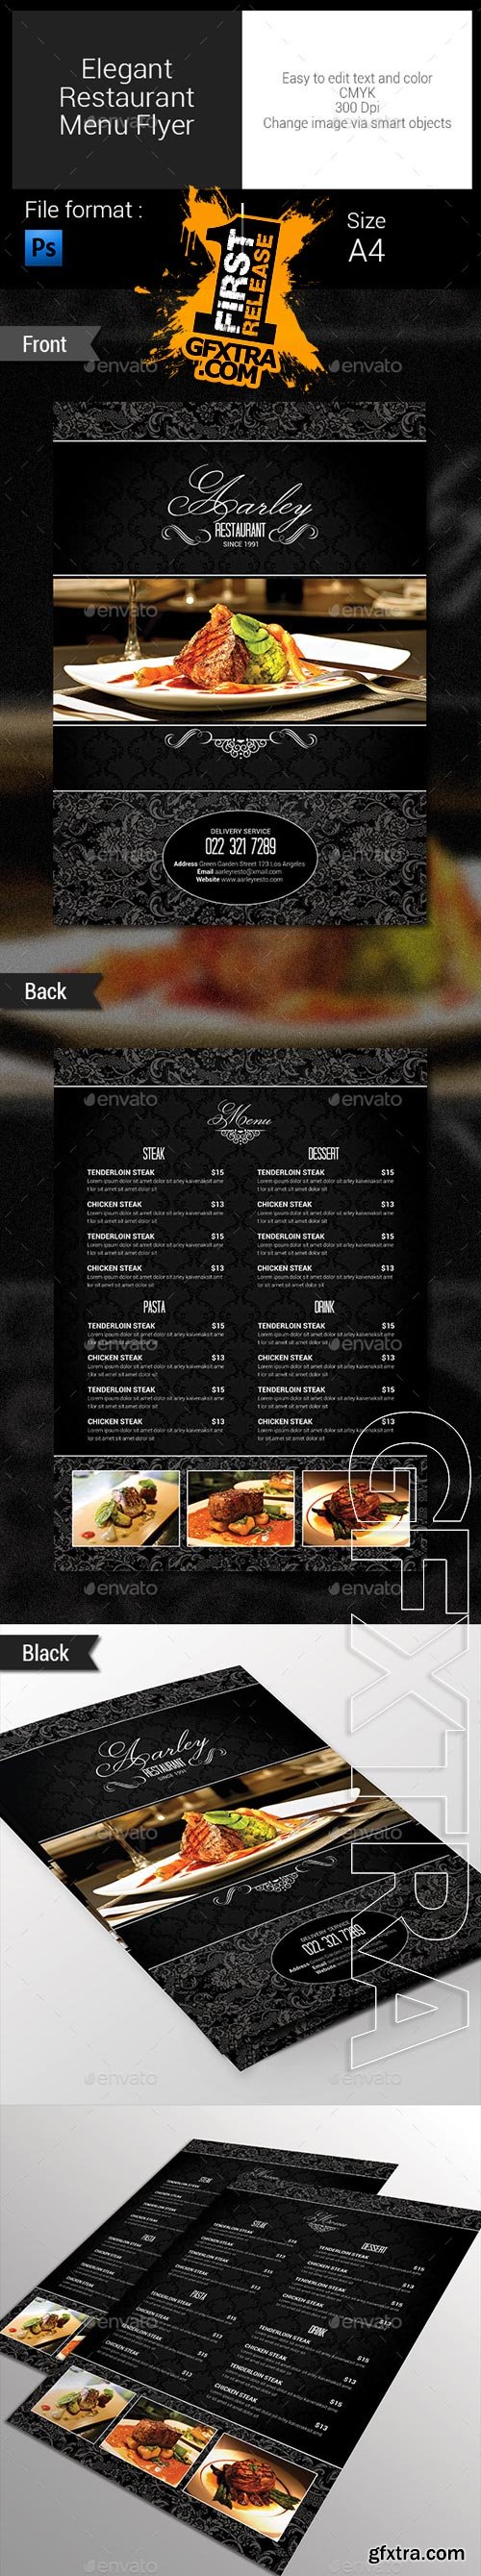 GraphicRiver - Elegant Restaurant Menu Flyer 9671212